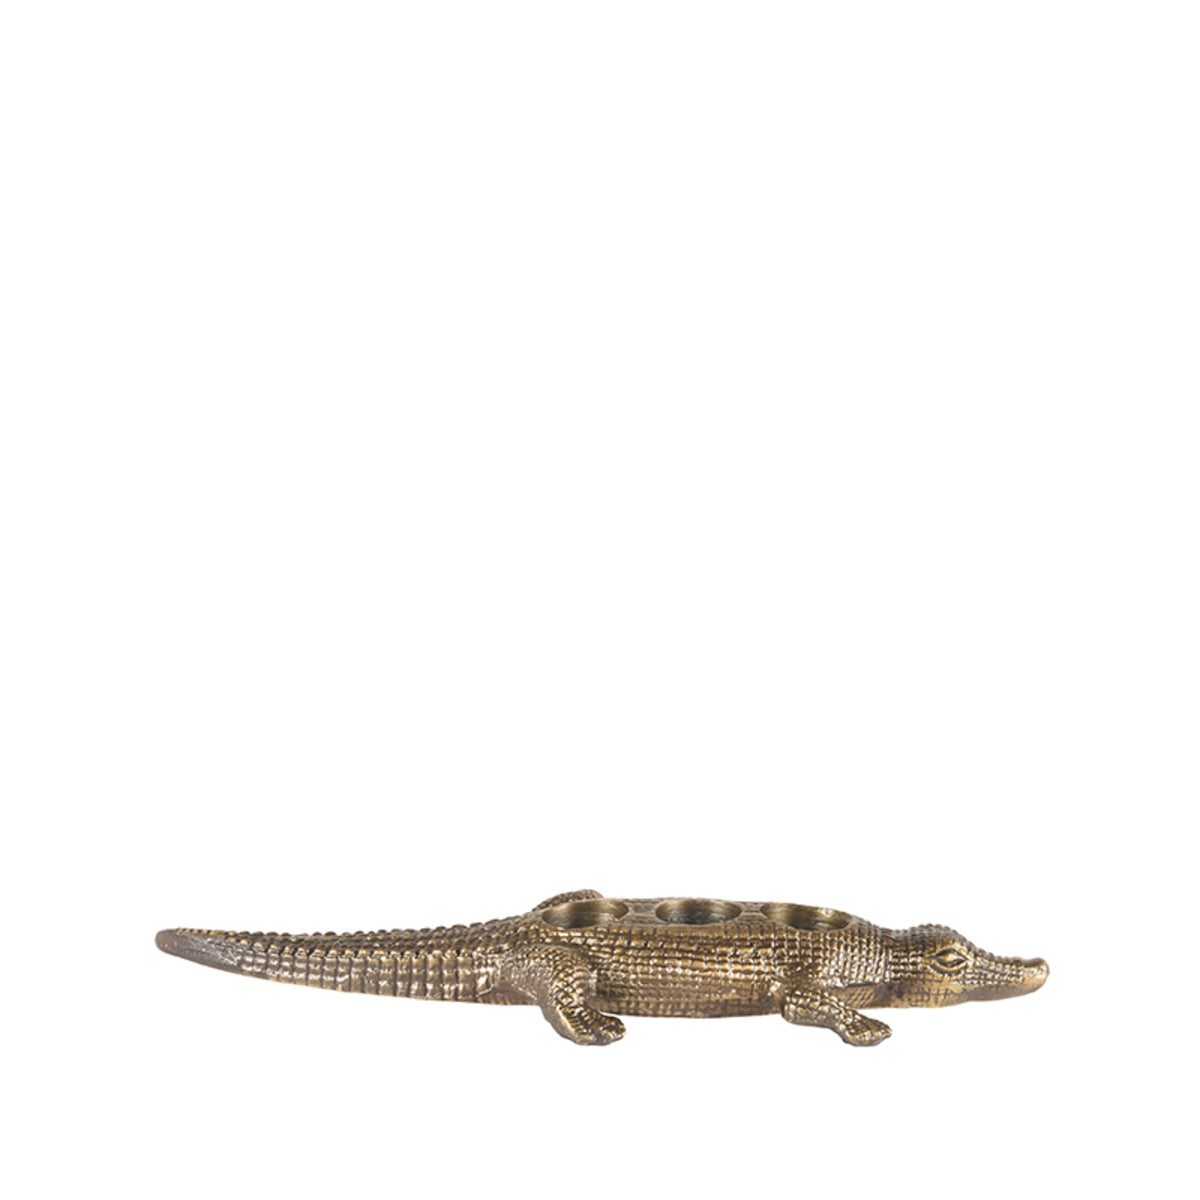 LABEL51 Crocodile - Antique gold - Metal